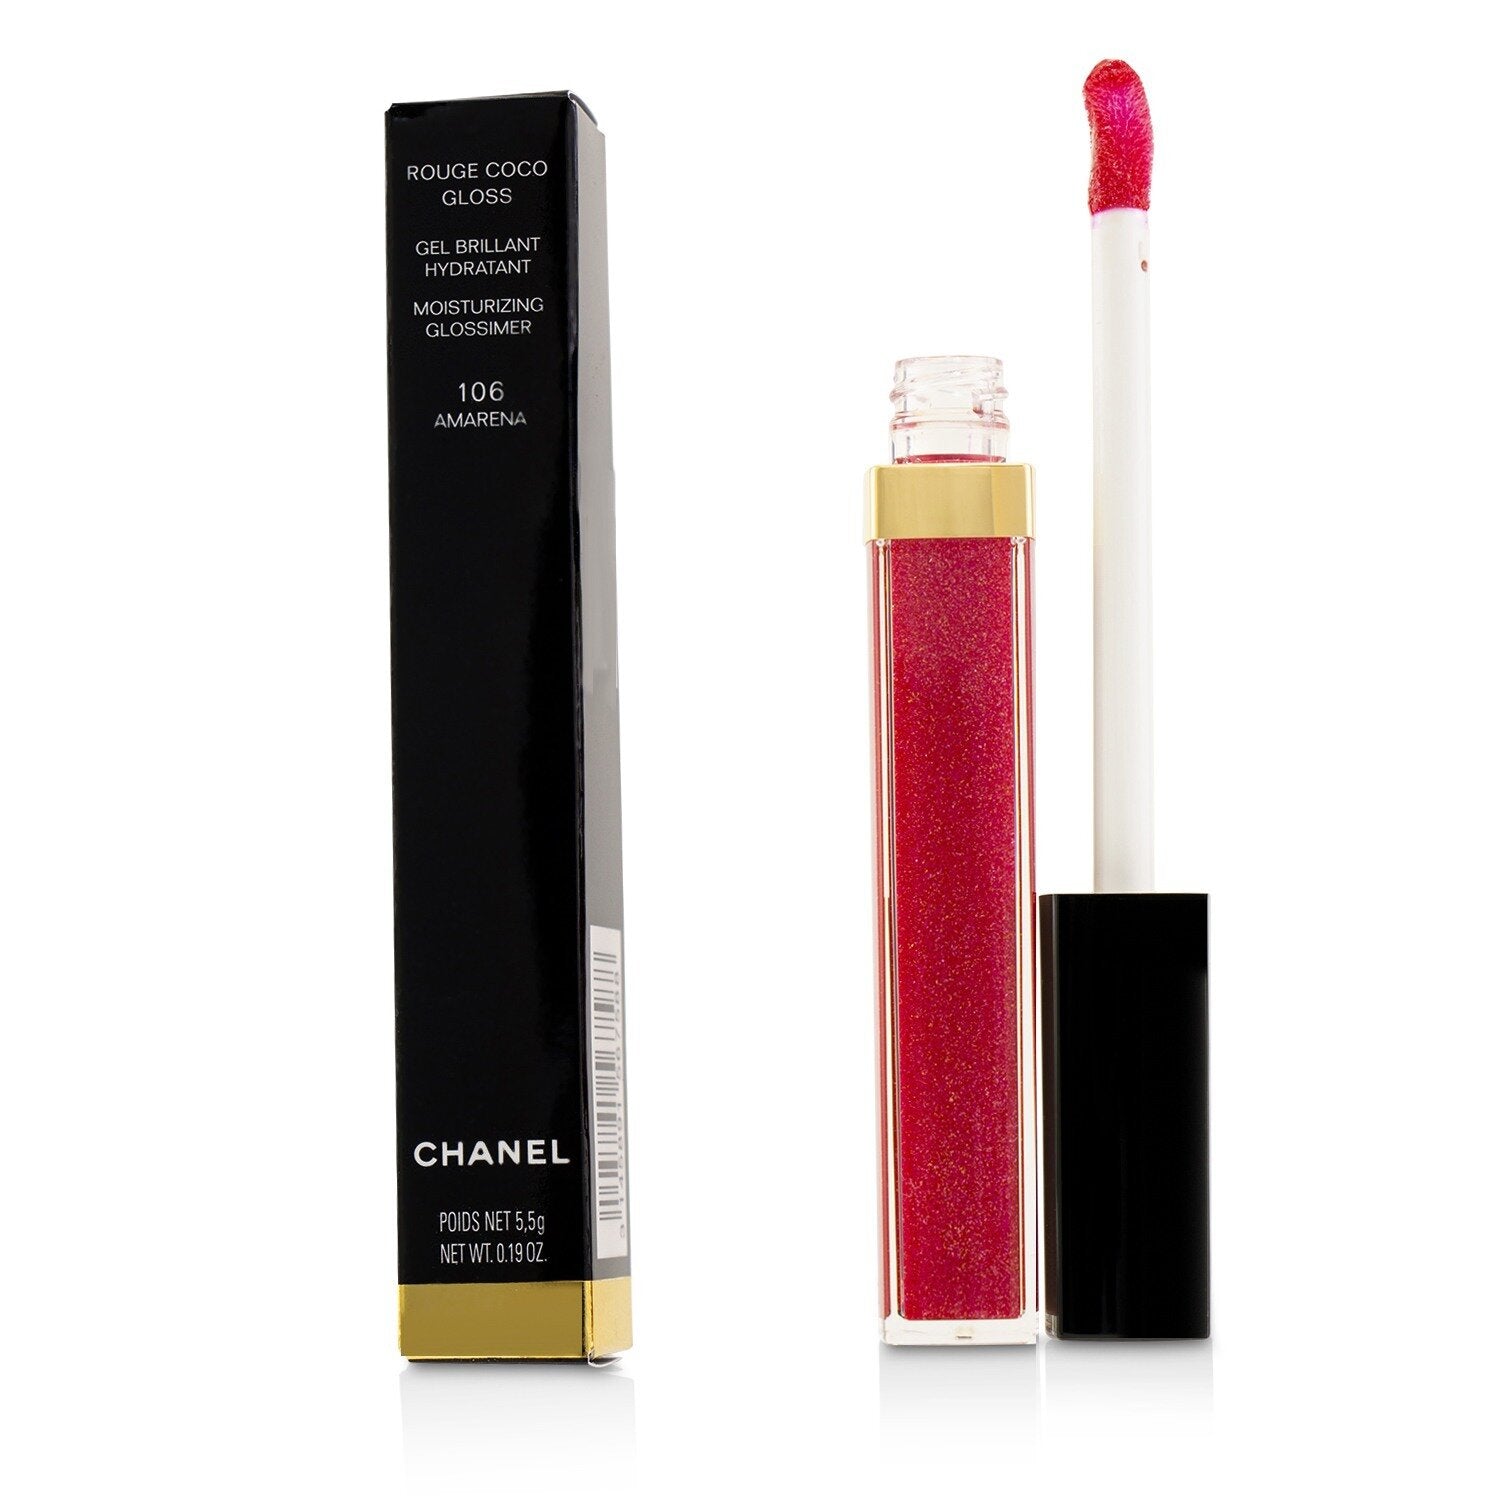 Chanel Rouge Coco Gloss Moisturizing Glossimer - # Amarena Beauty Co. USA